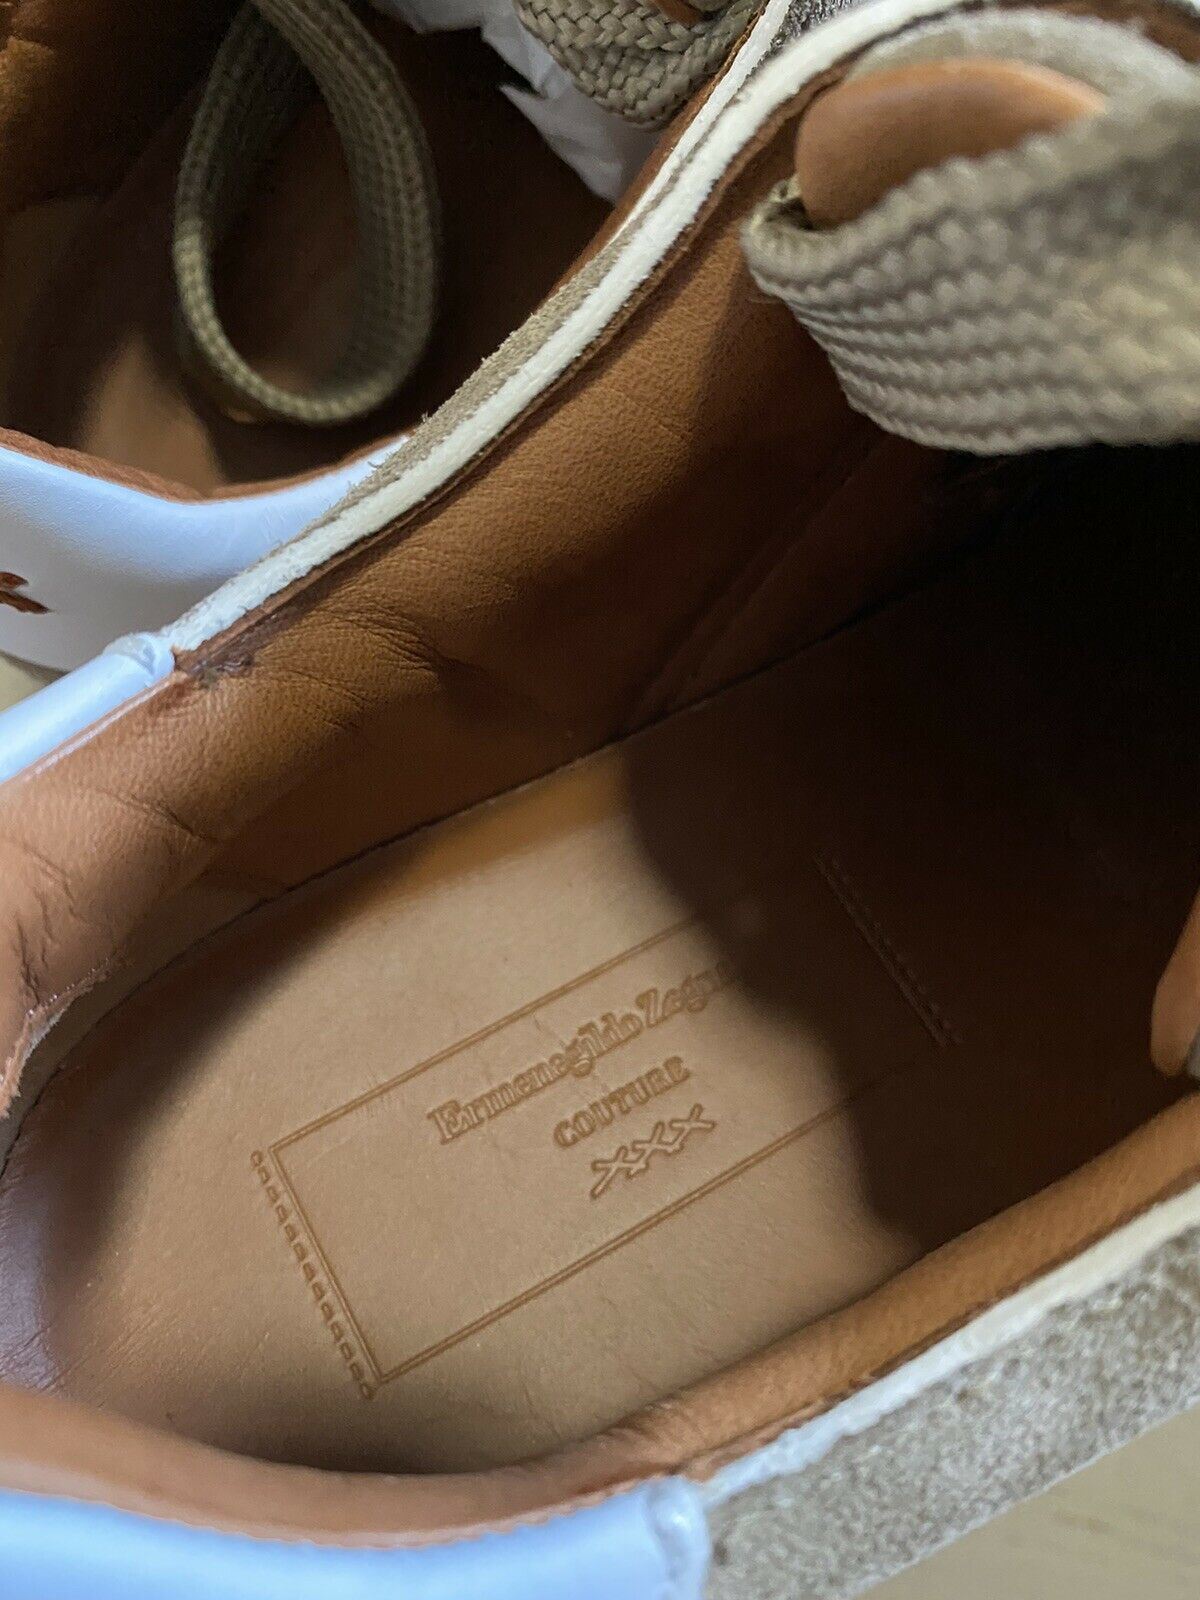 Neue $850 Ermenegildo Zegna Couture Wildleder/Leder Sneakers Schuhe LT Brown 10,5 US